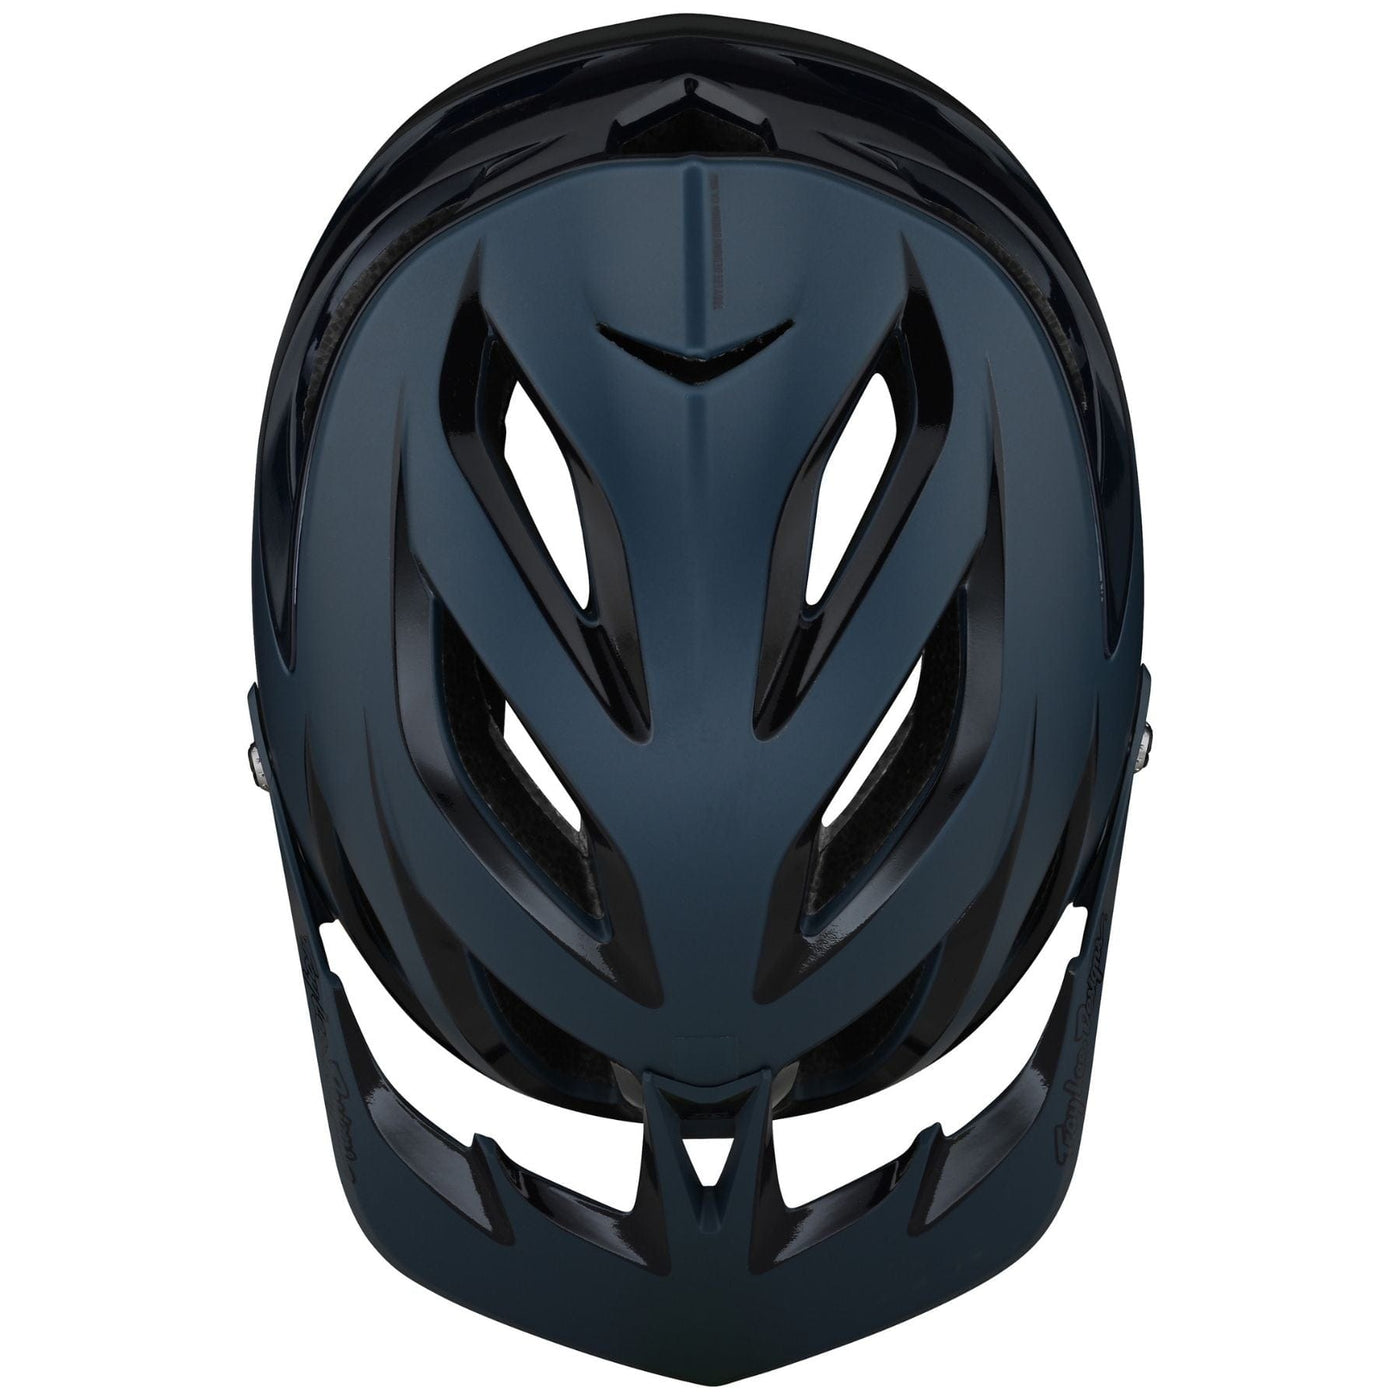 tld mountain bike helmet for adults